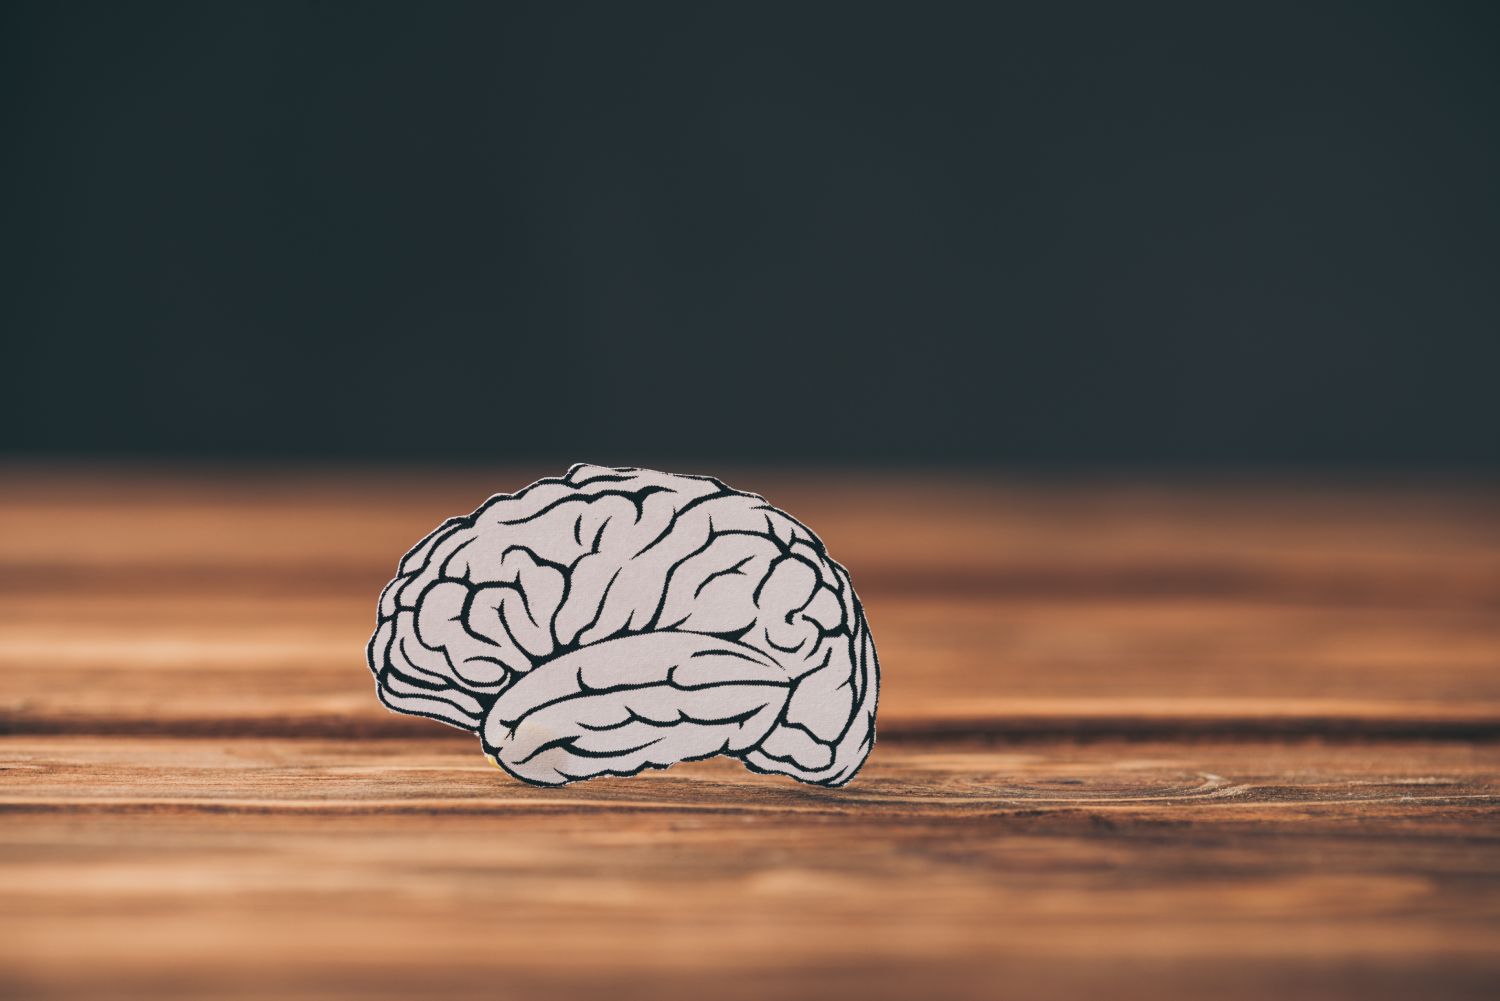 Paper Brain as Dementia Symbol